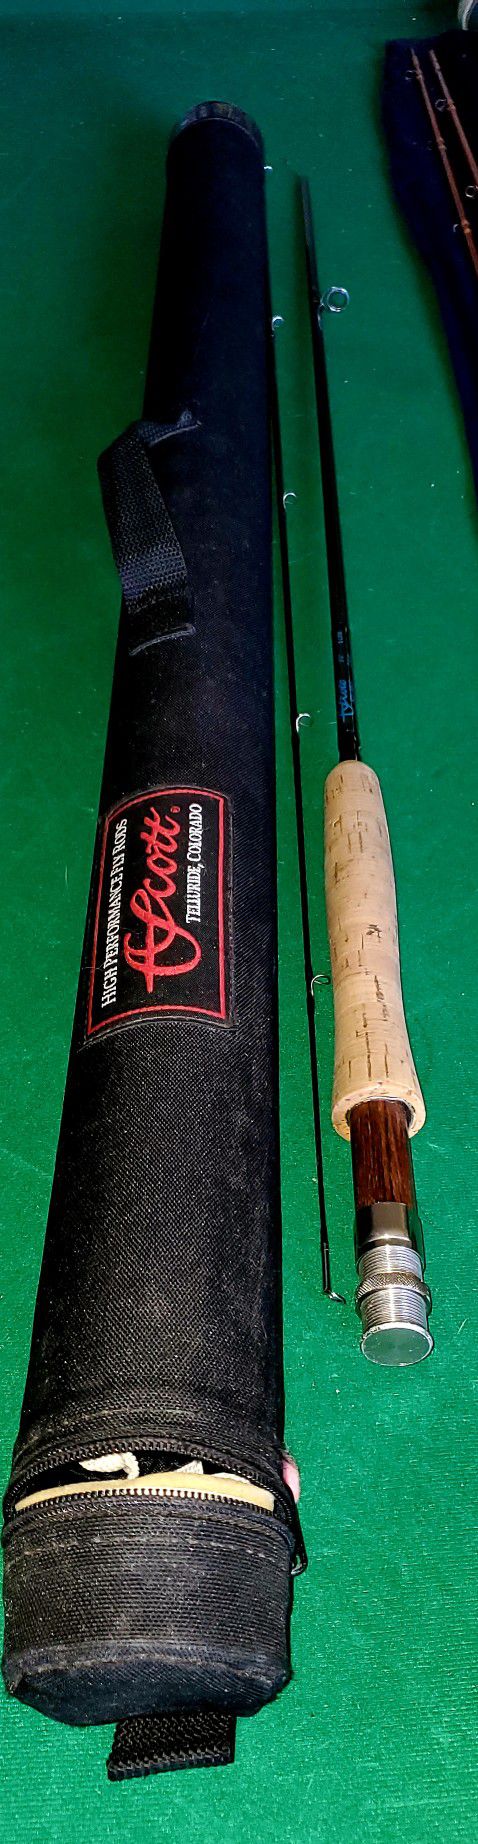 SCOTTS Graphite Fly Fishing Rod